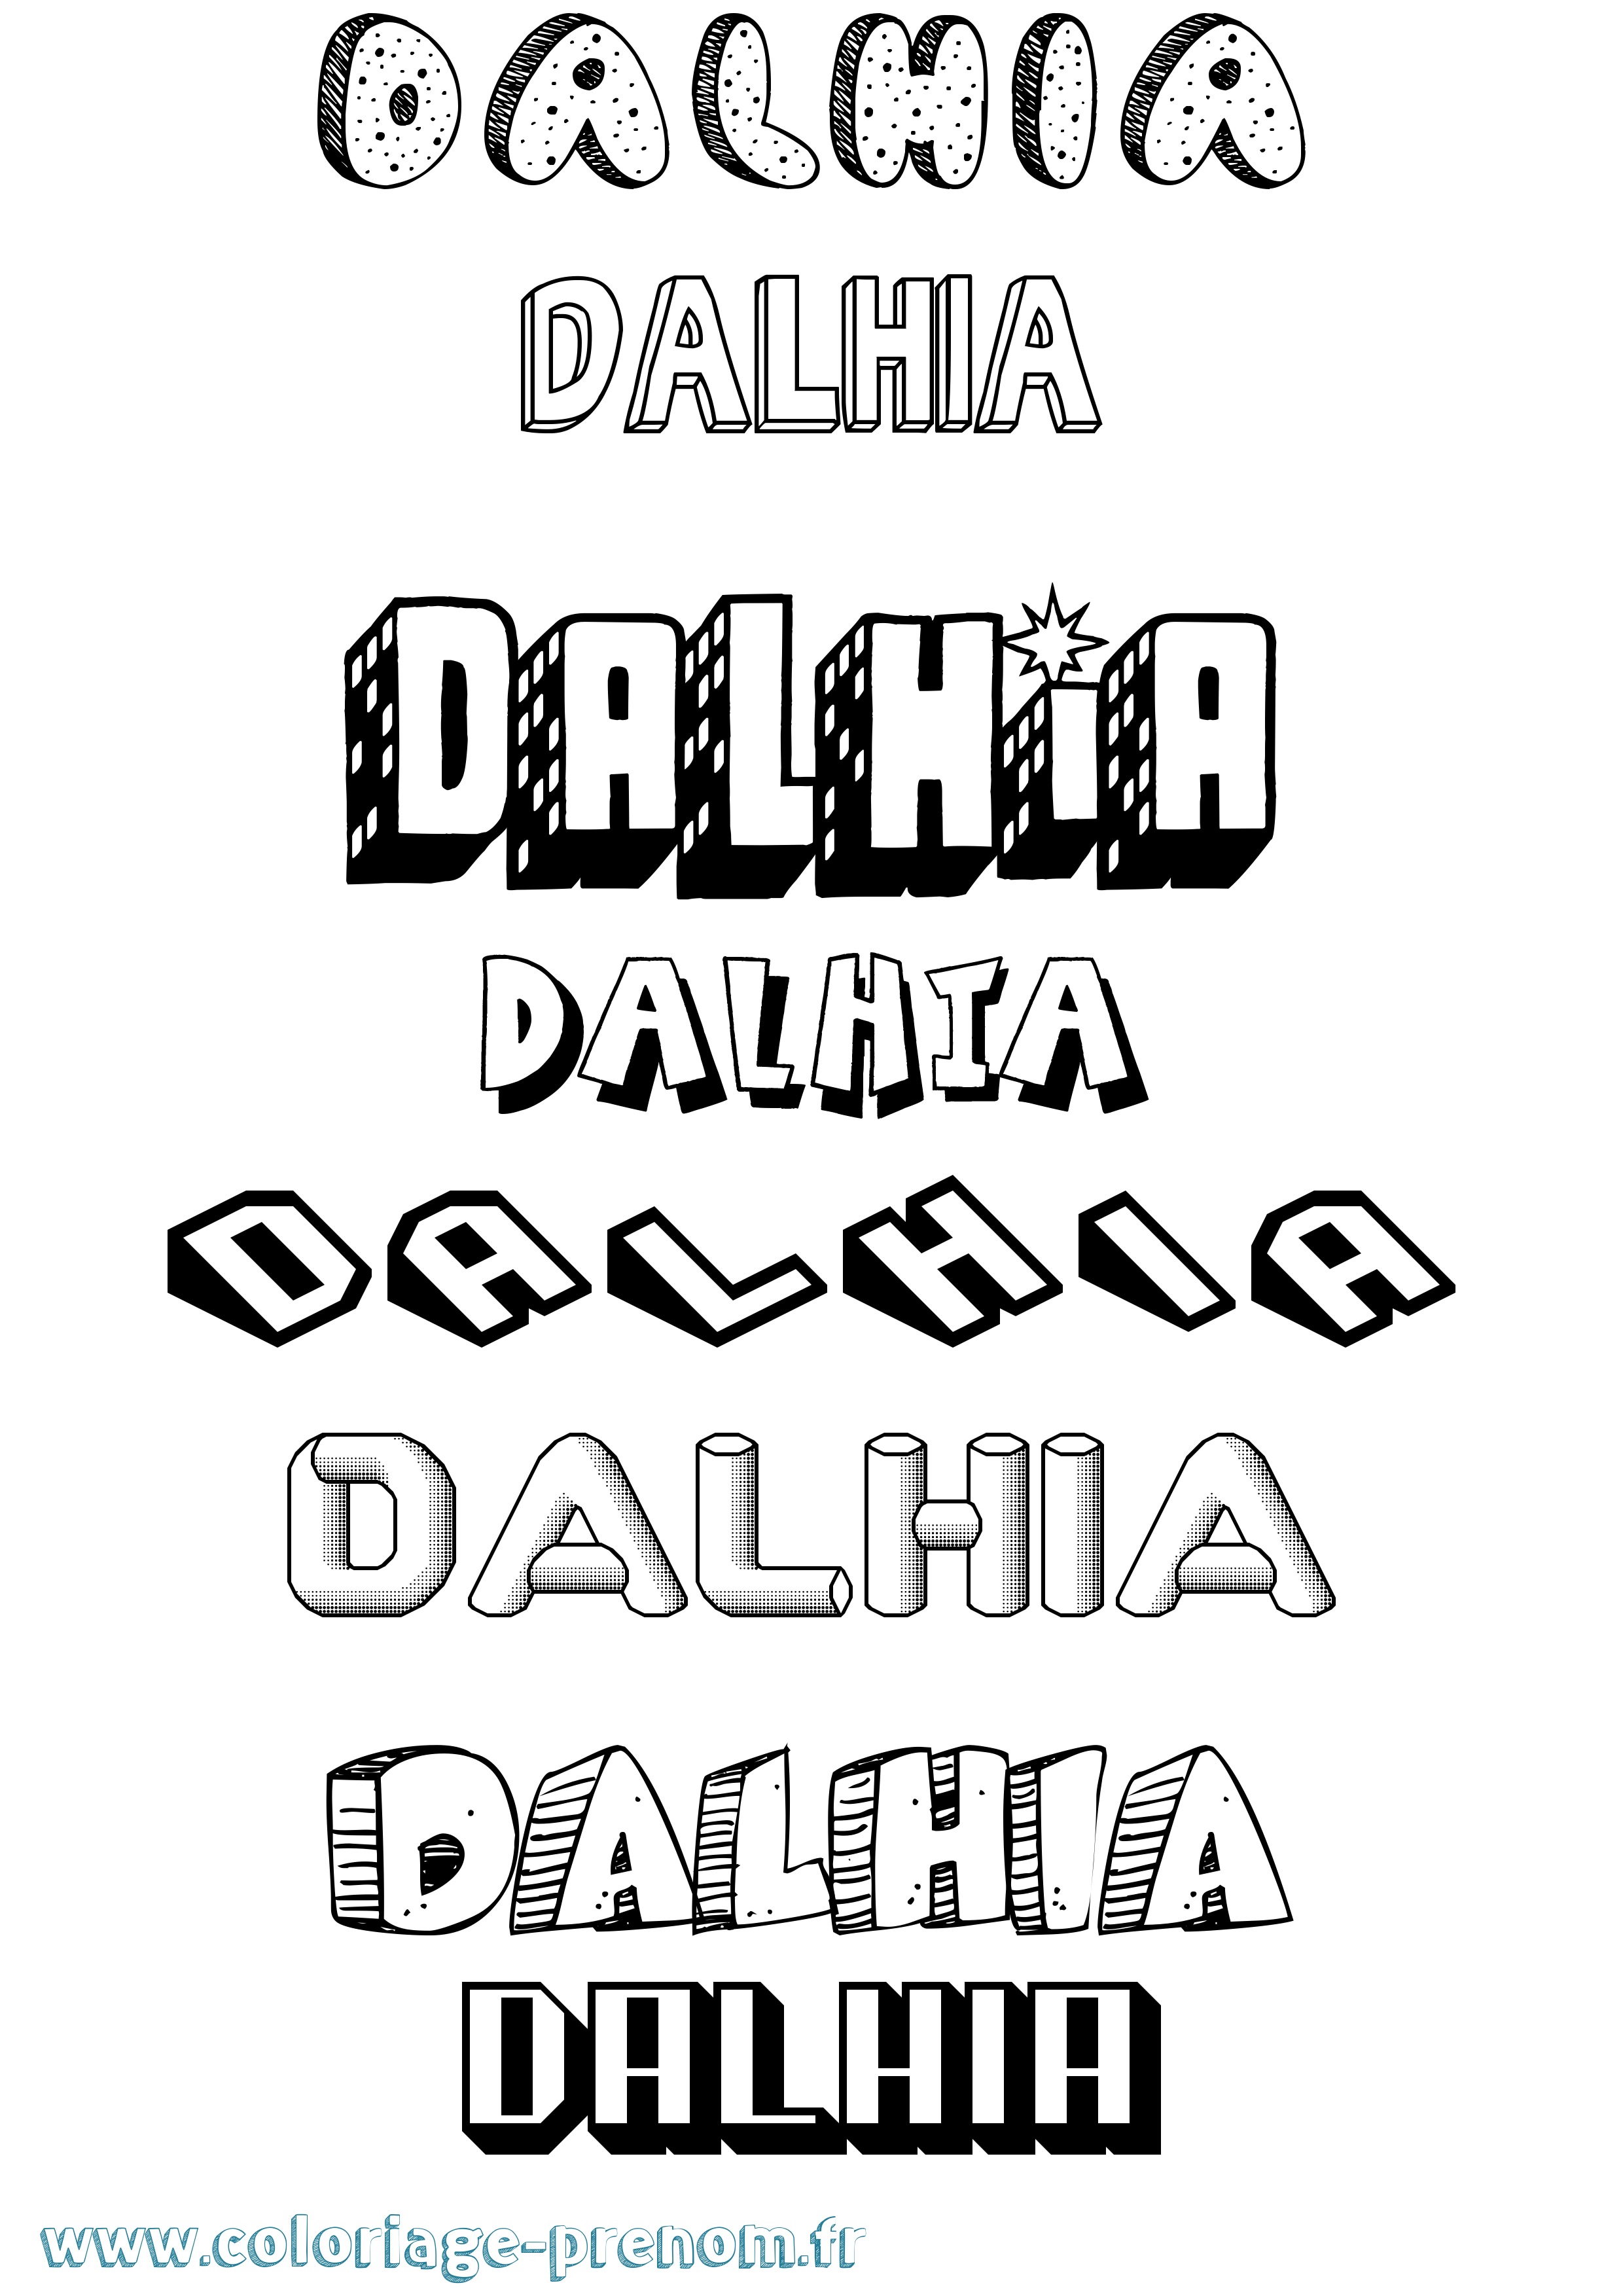 Coloriage prénom Dalhia Effet 3D